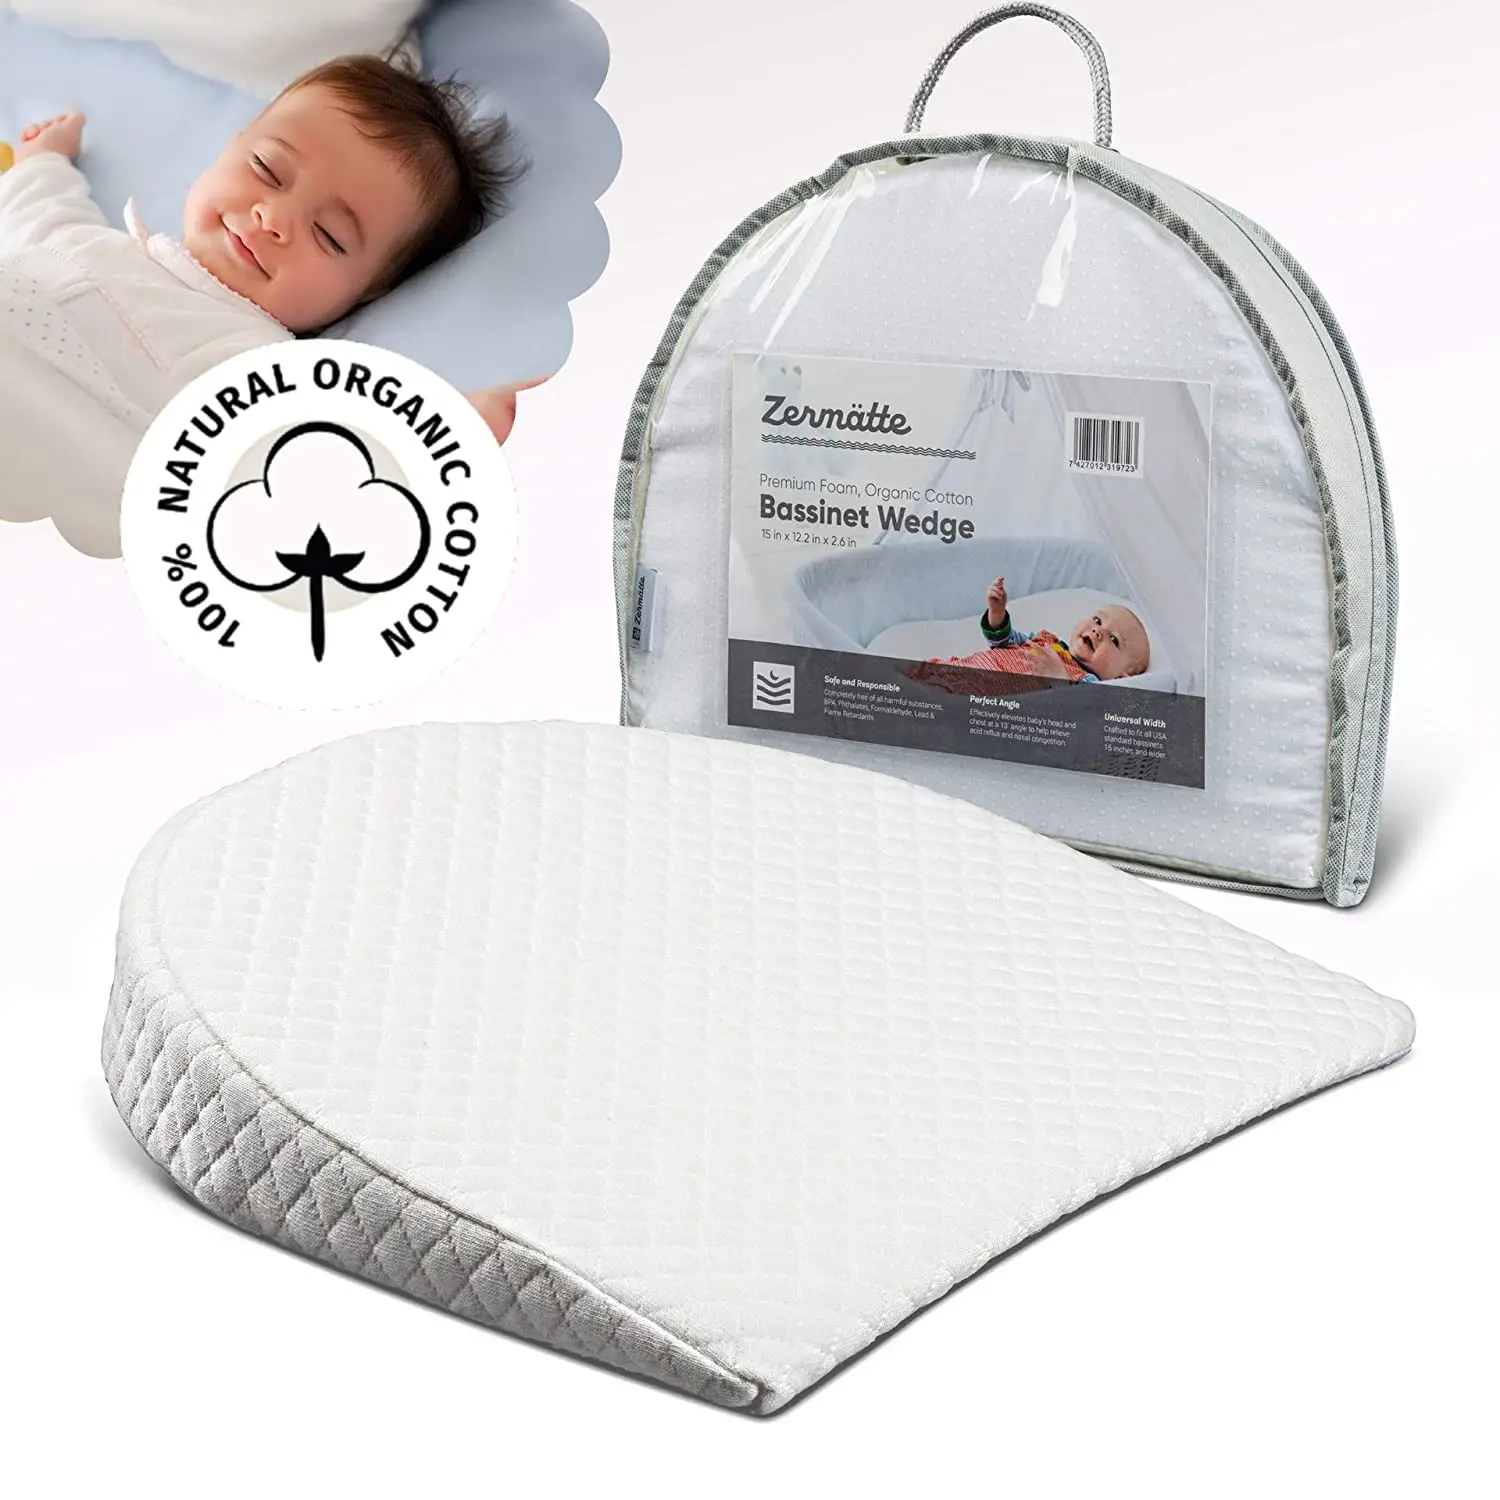 BabyPrem 11.5" x 12" Baby Bedding Anti Reflux Colic Pillow Cushion Wedge 